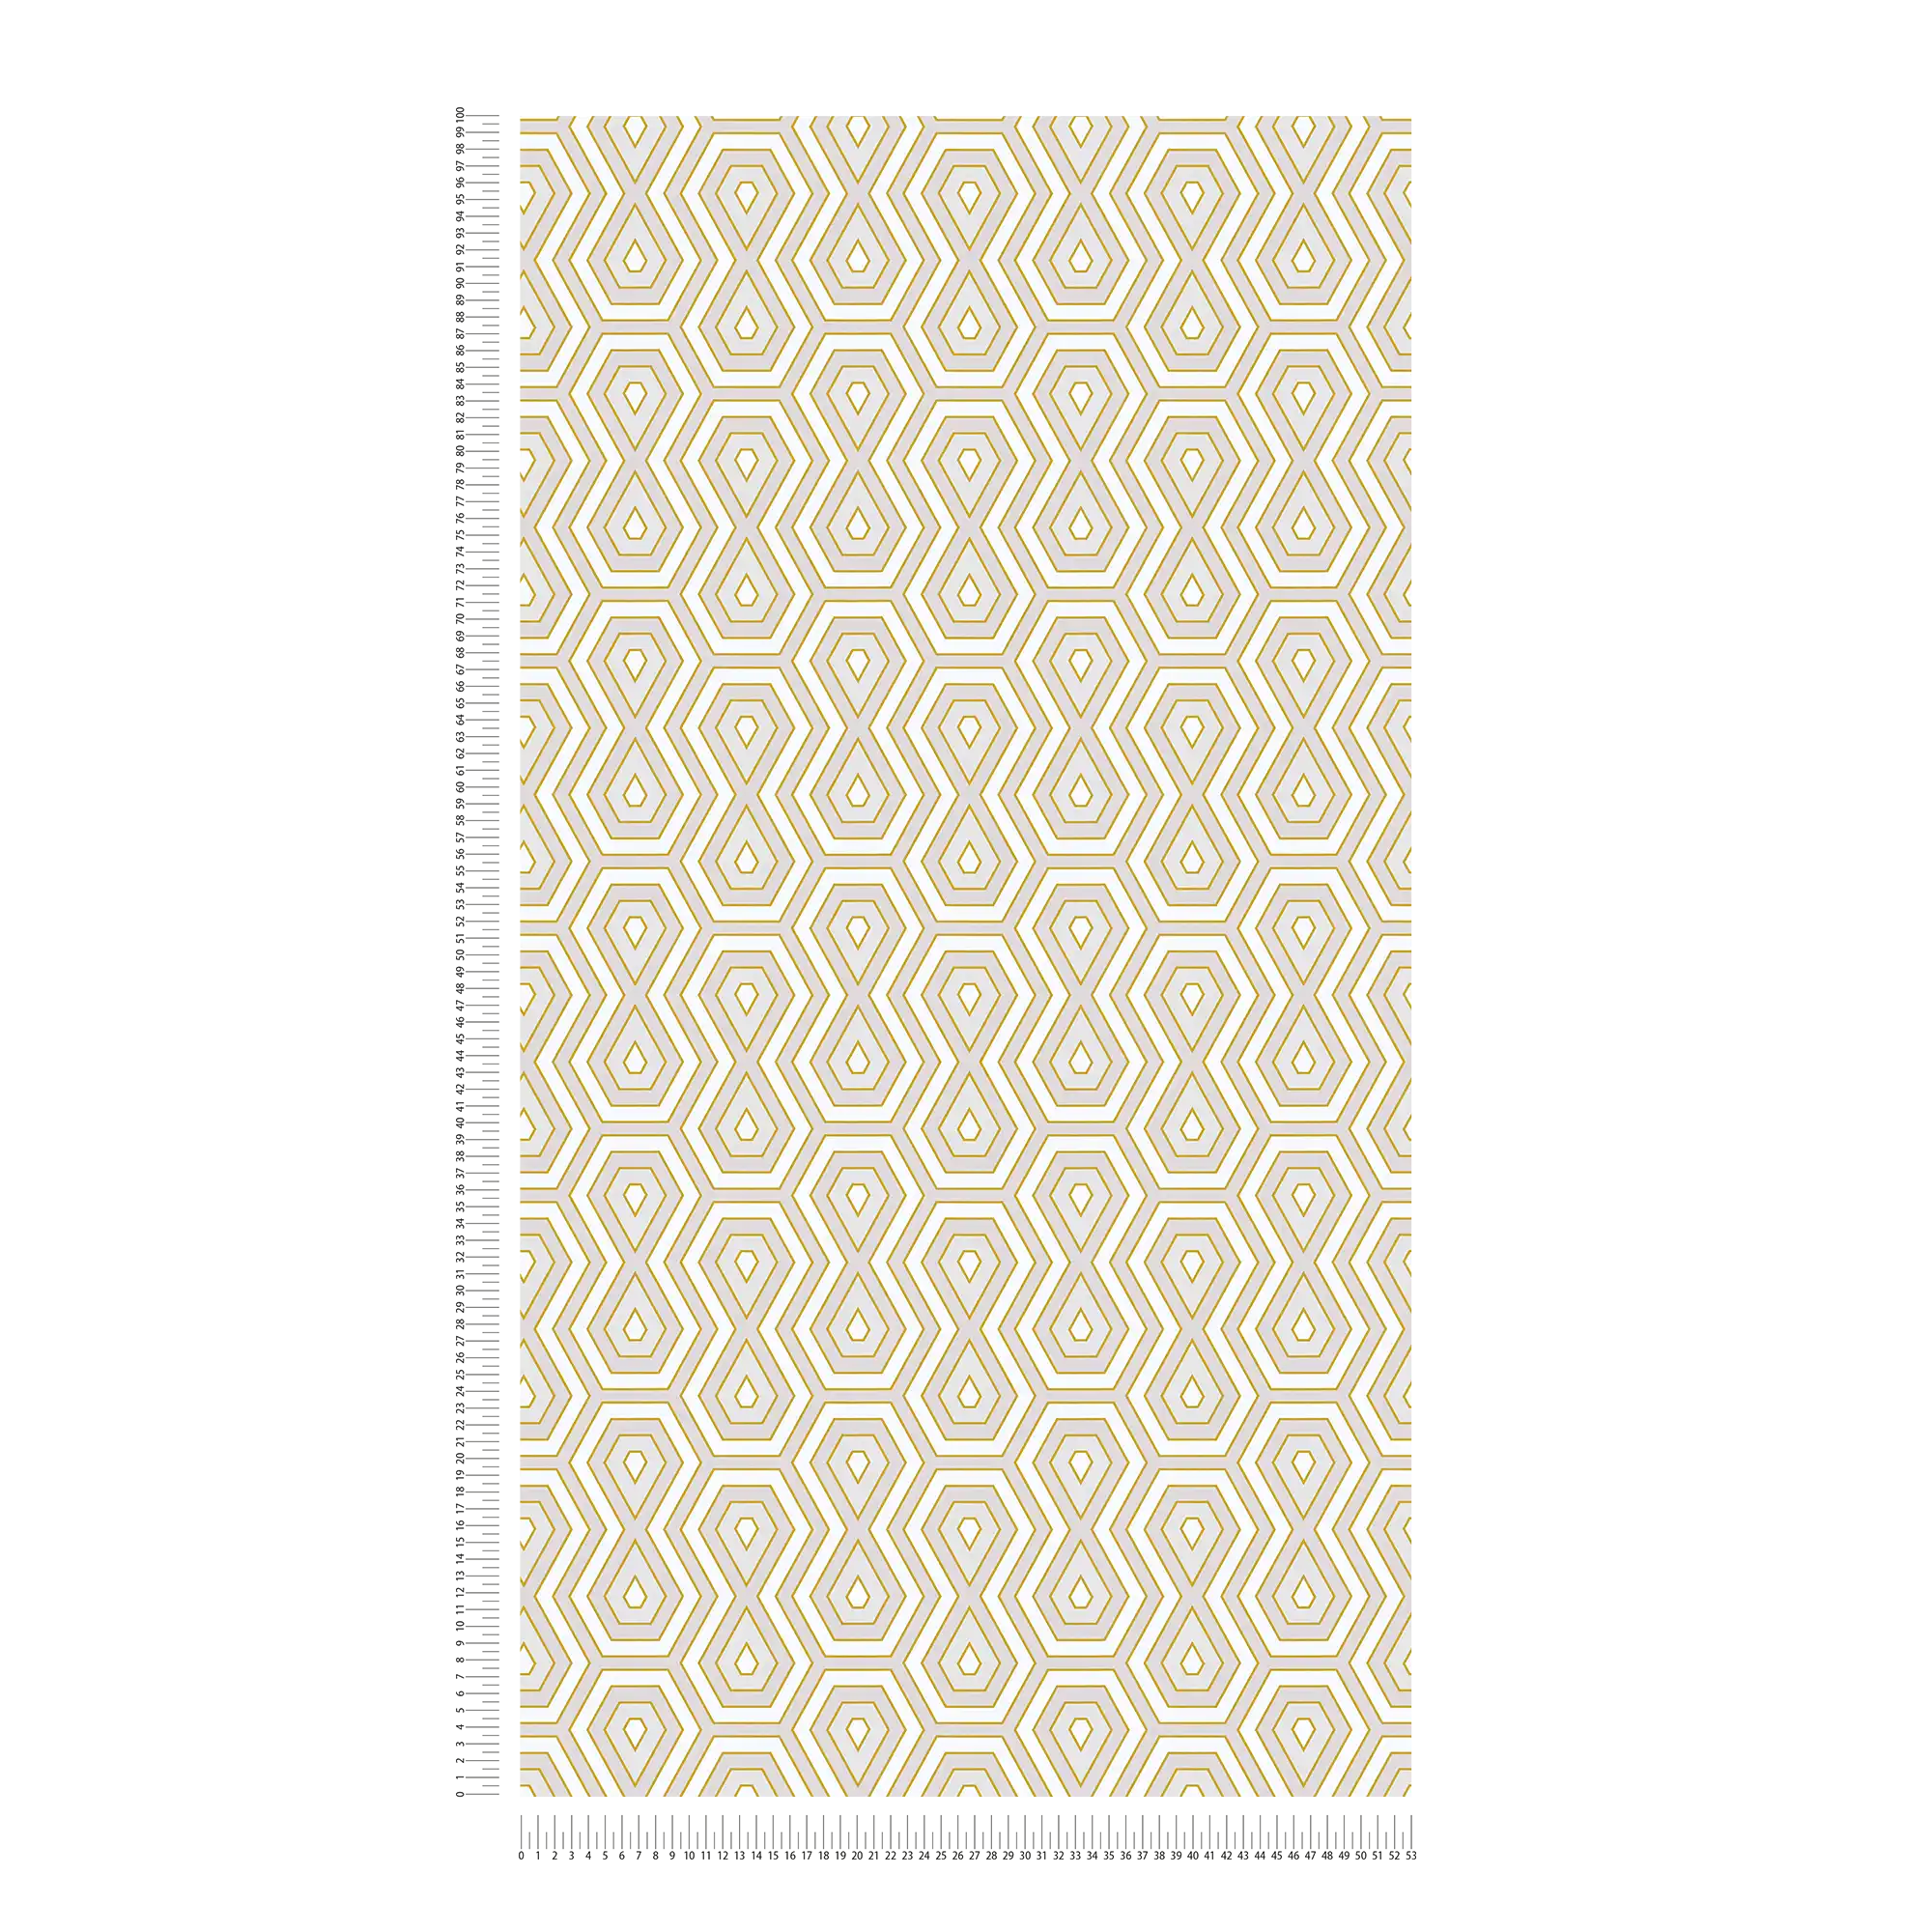             Tapete Grau & Gold mit Grafik Design im Retro Stil – Gold, Weiß, Grau
        